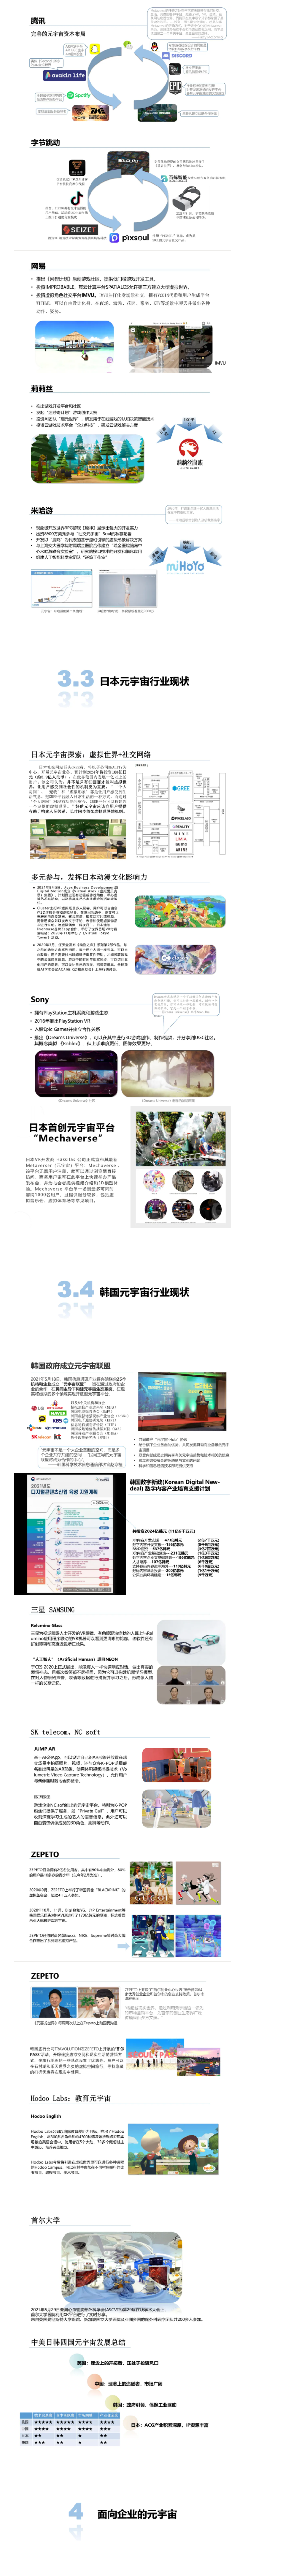 6-FireShot Capture 071 - 清华大学：2020-2021元宇宙研究报告！ - mp.weixin.qq.com.png